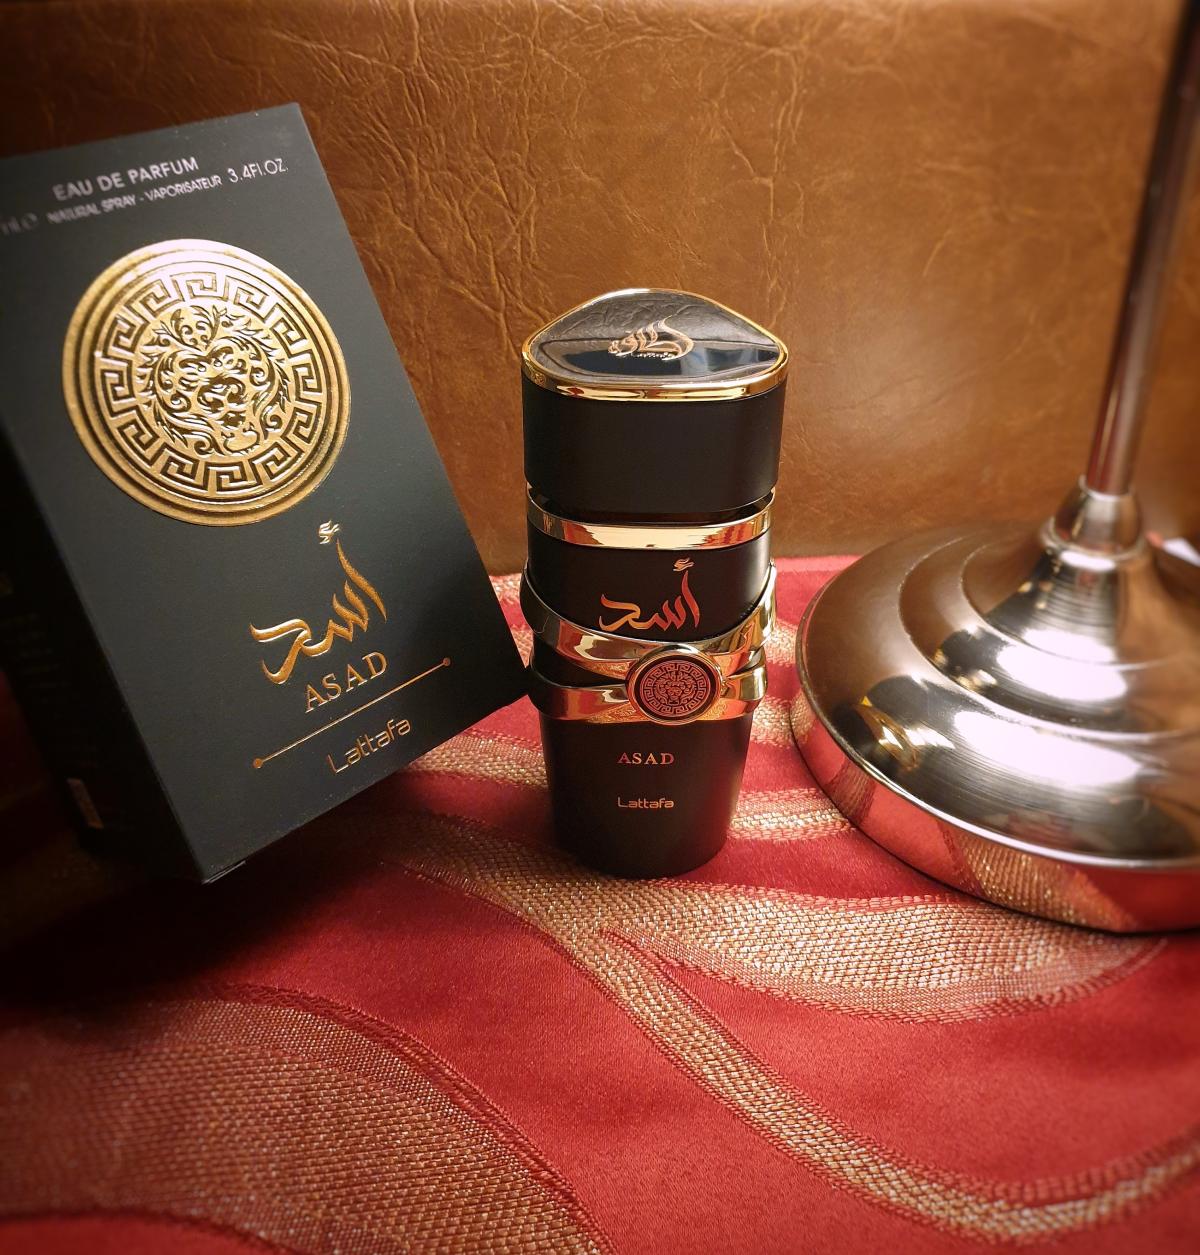 Asad Lattafa Perfumes cologne - a fragrance for men 2021